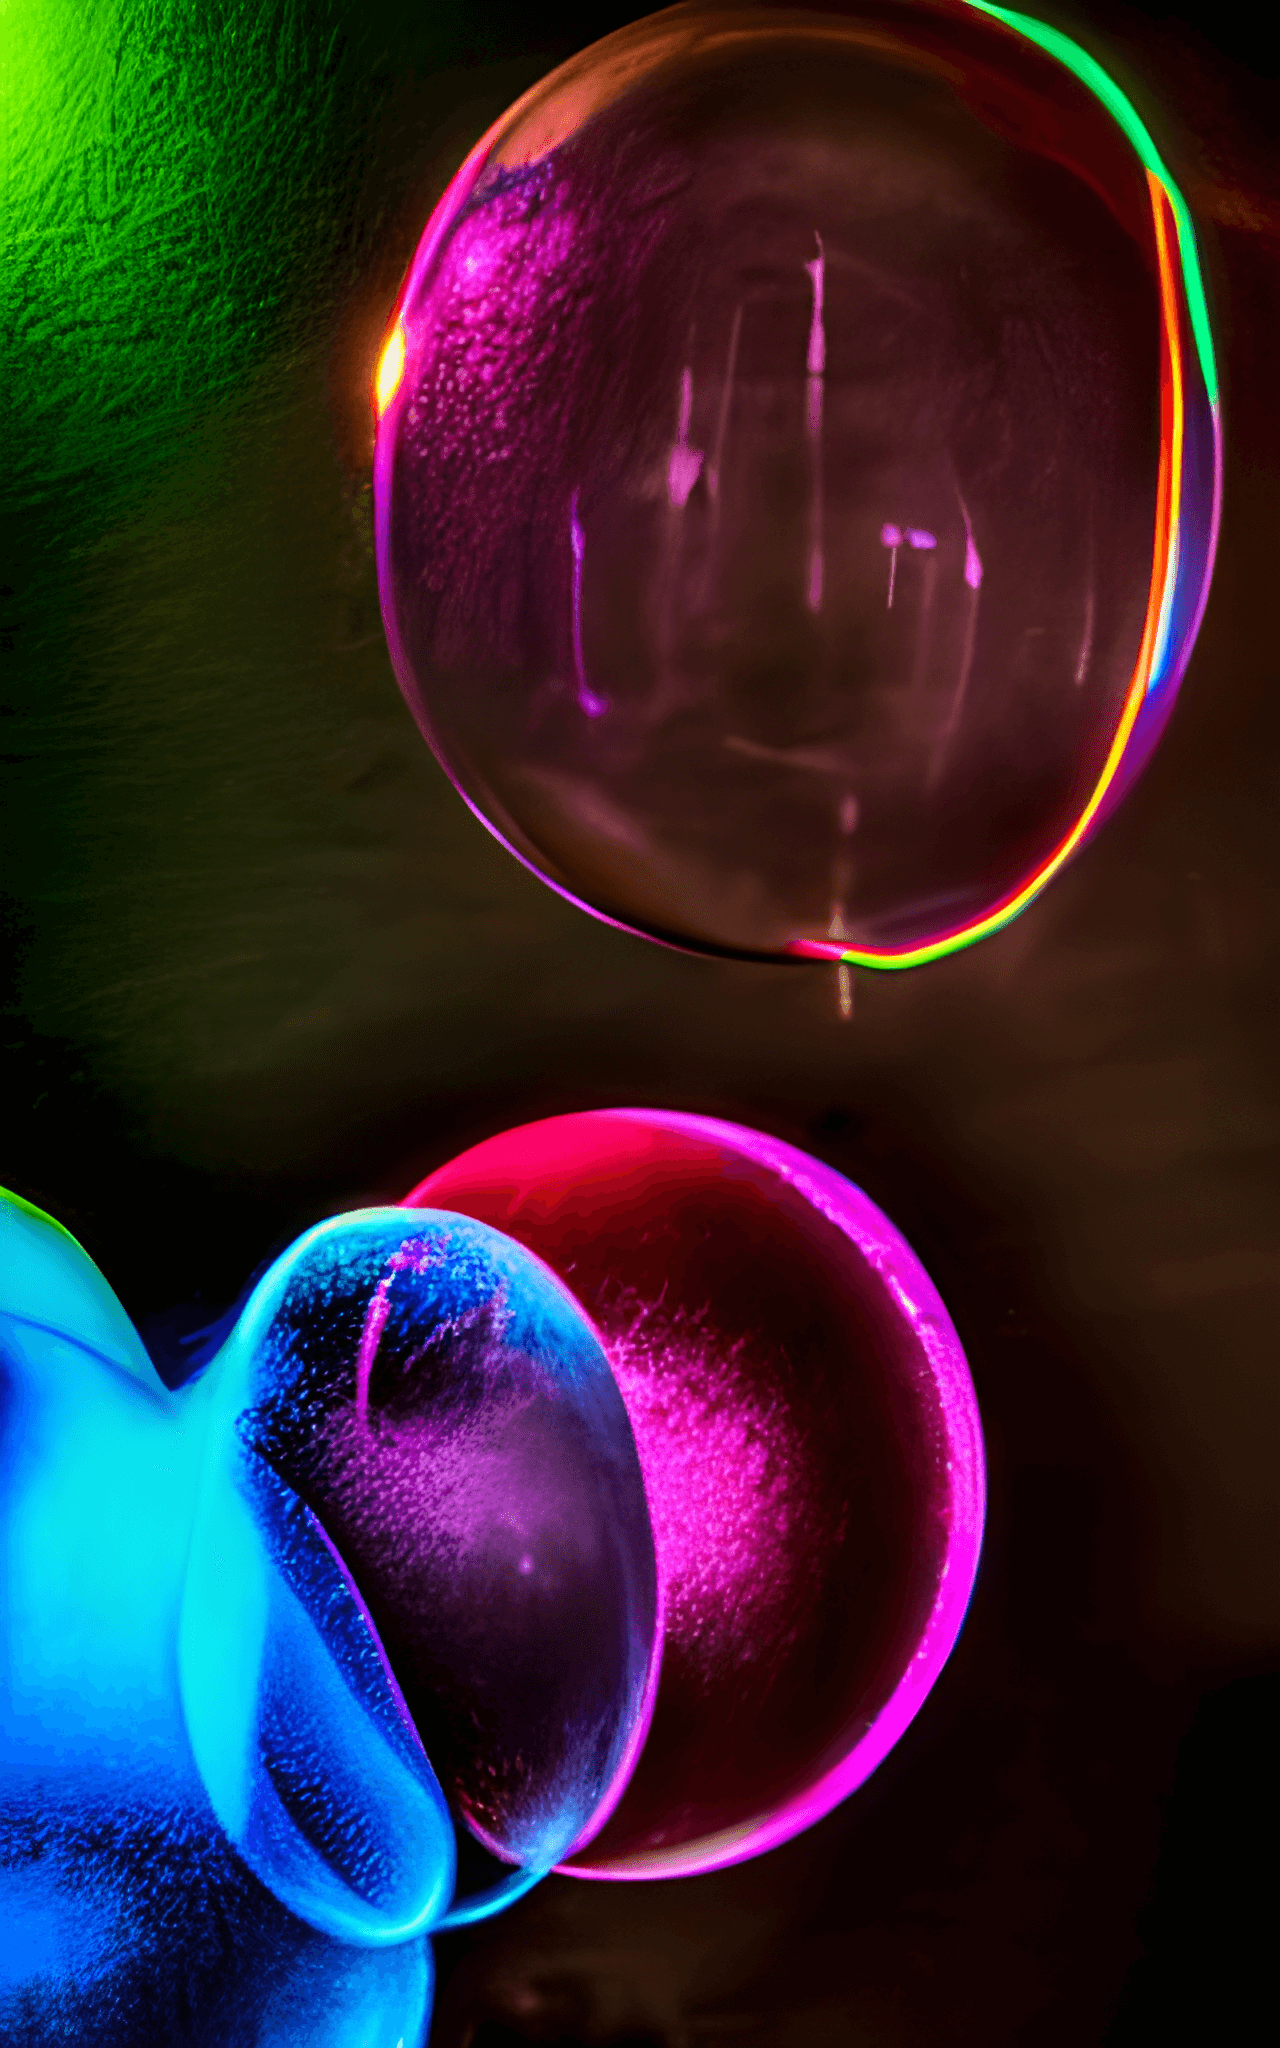 A couple of bubbles in the dark - Bubbles